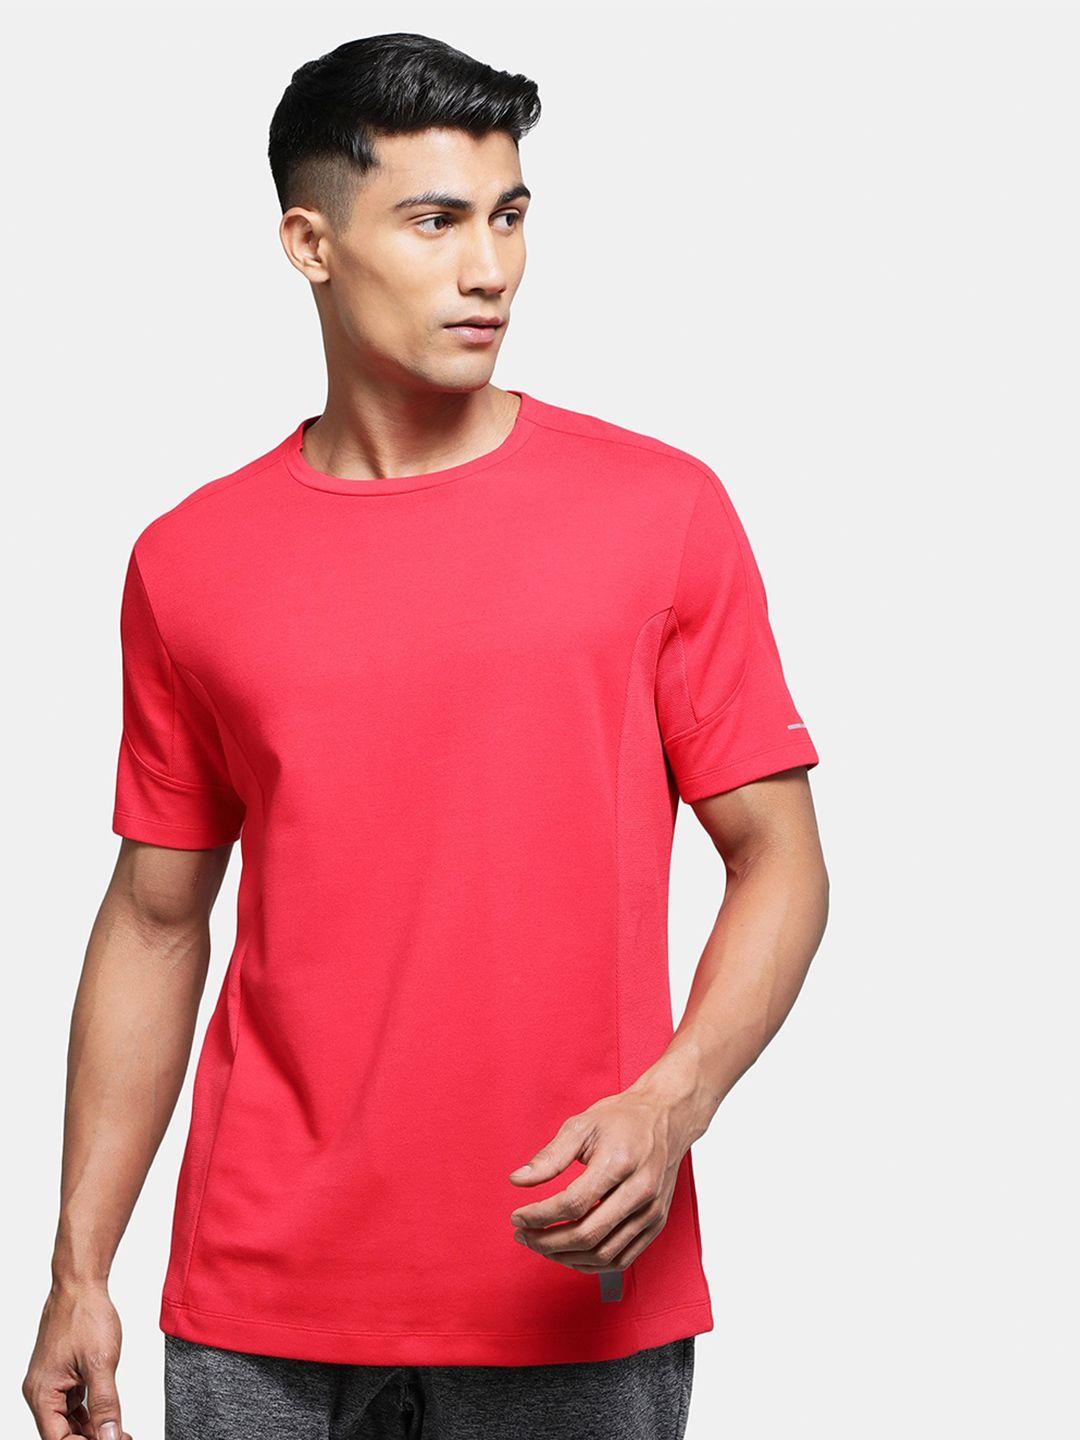 jockey-raglan-sleeves-breathable-mesh-antimicrobial-cotton-sports-t-shirt